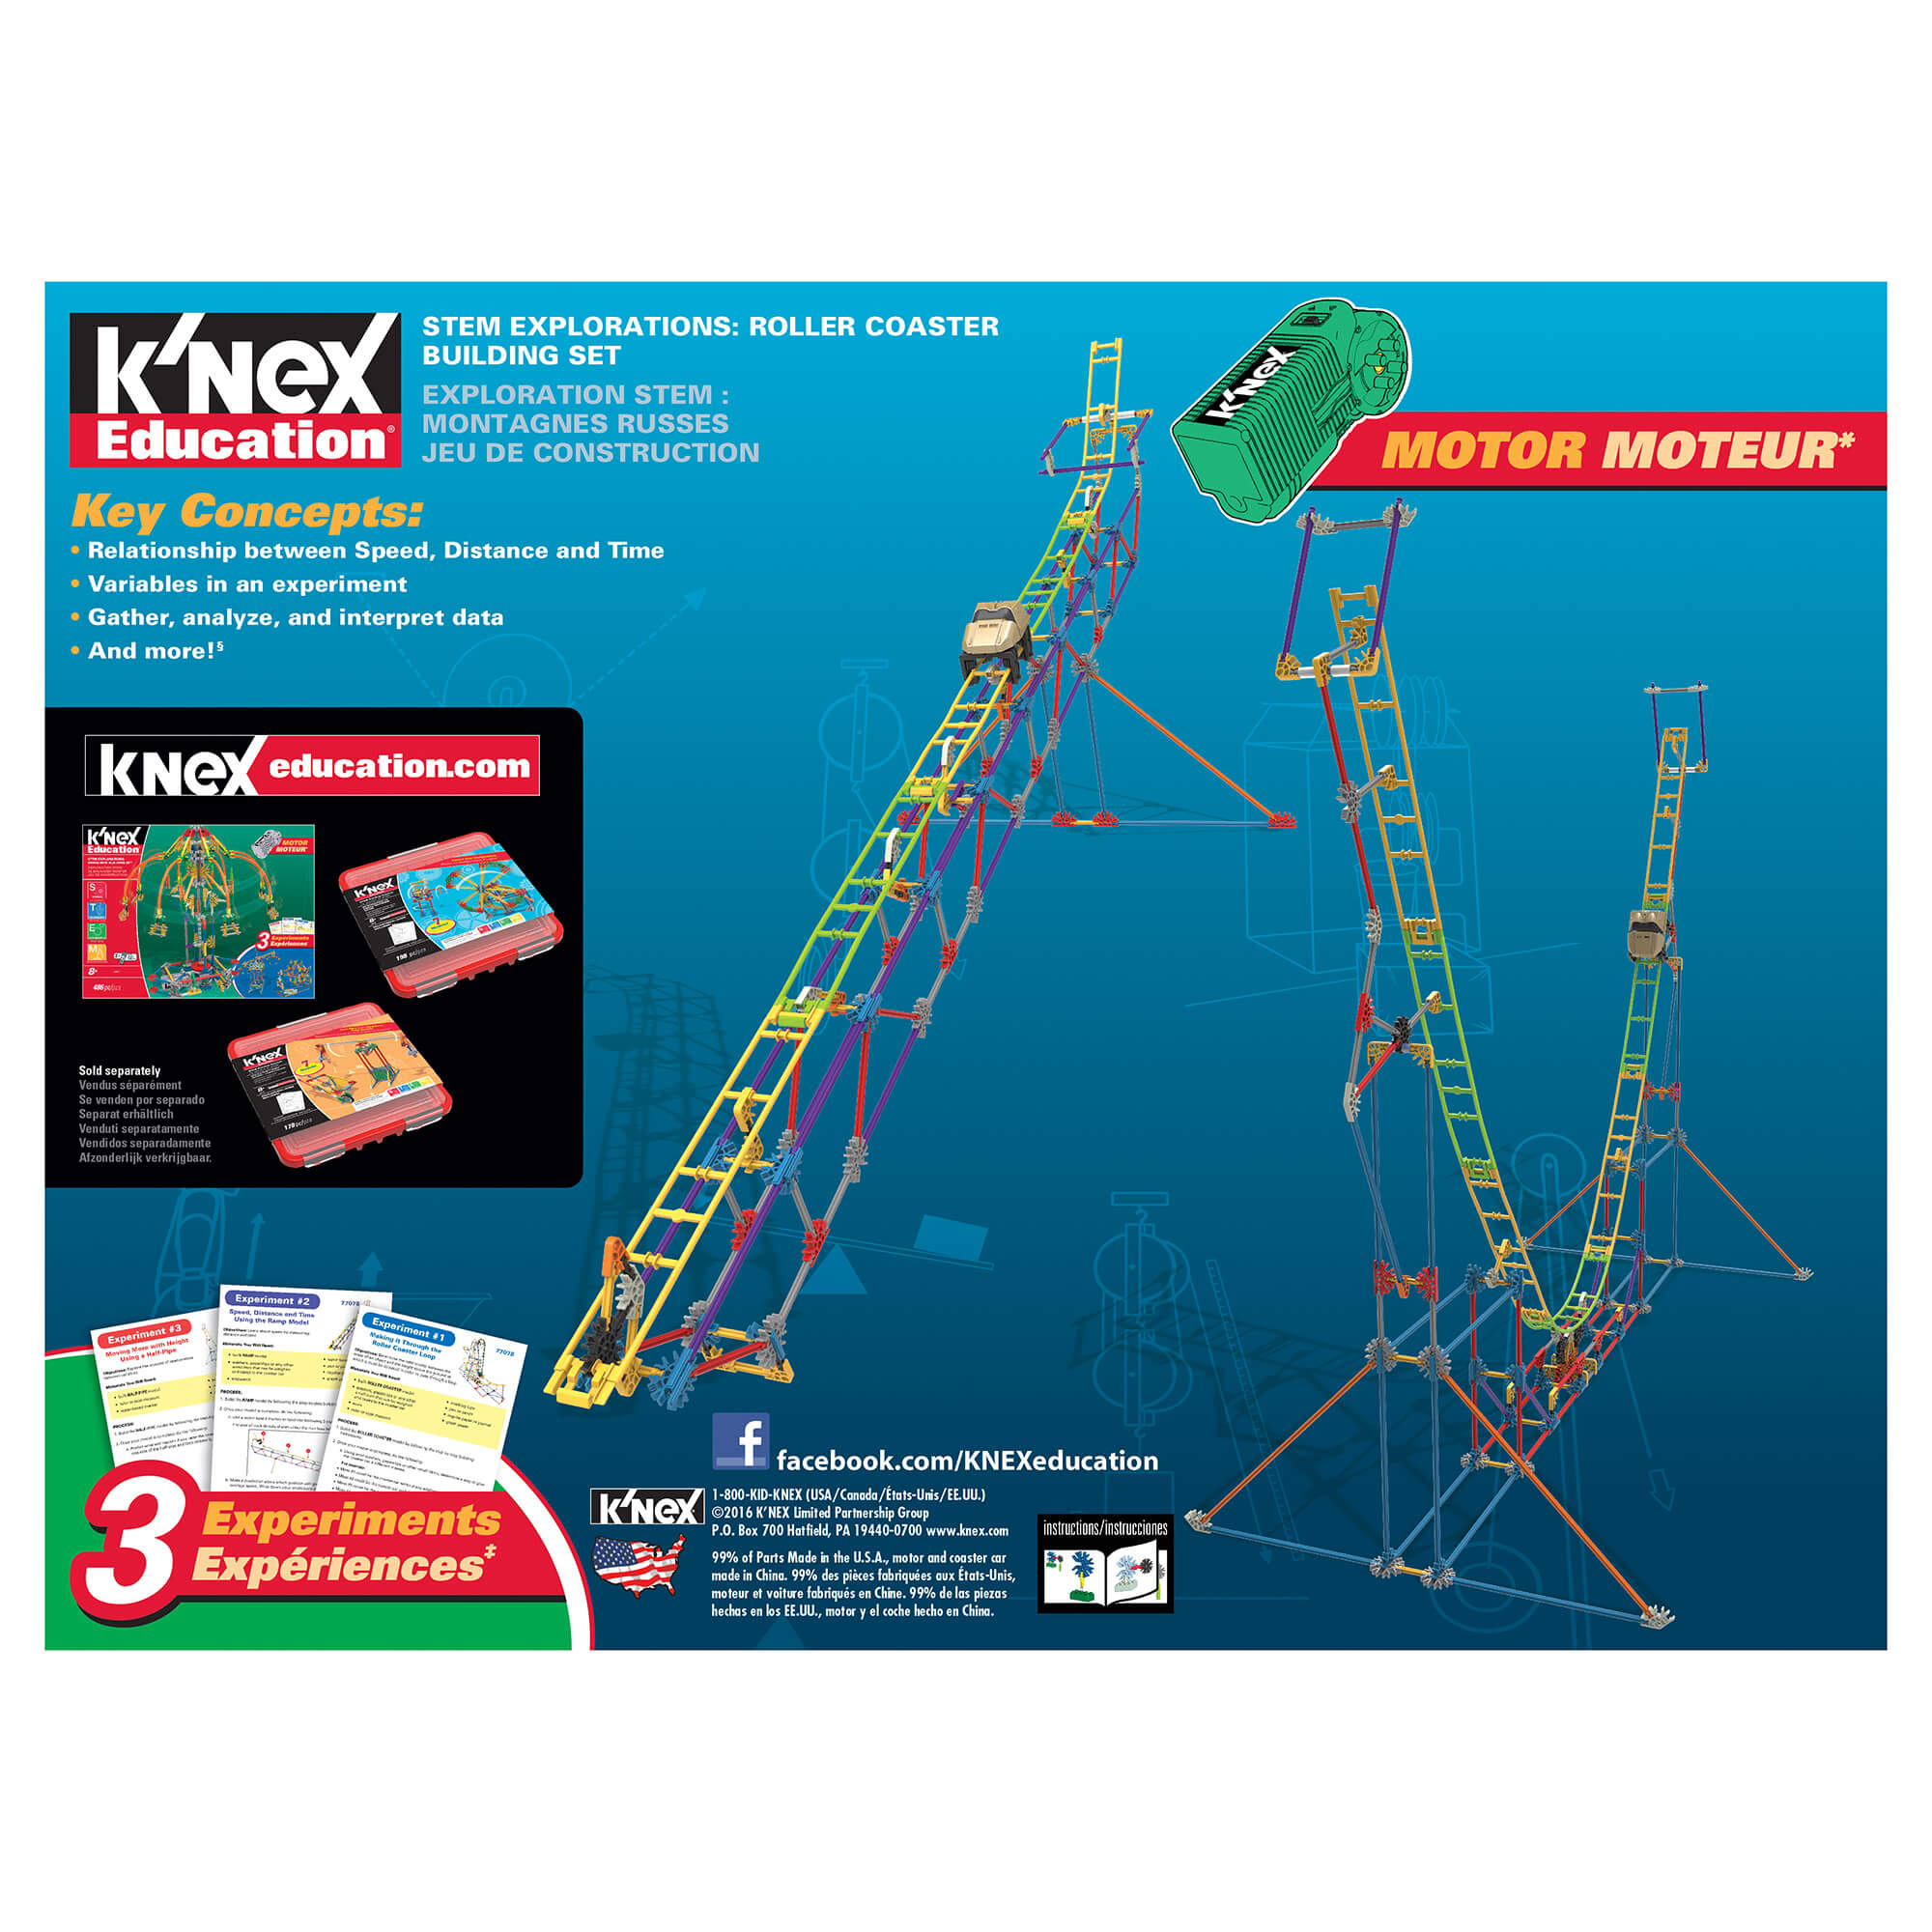 K'NEX Education STEM Explorations: Roller Coaster Building Set